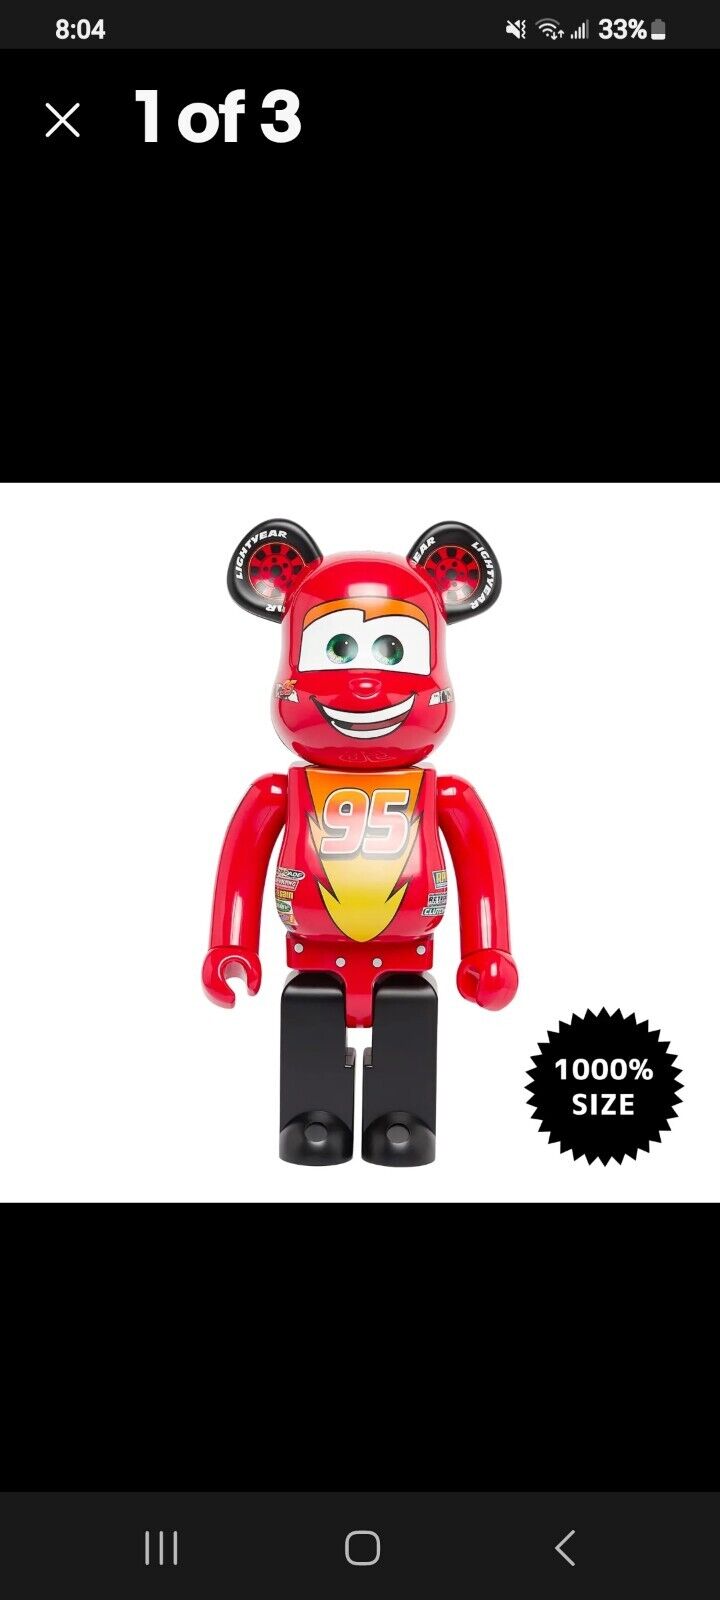 Disney Pixar Cars: Lightning McQueen 1000% Bearbrick by Medicom Toy